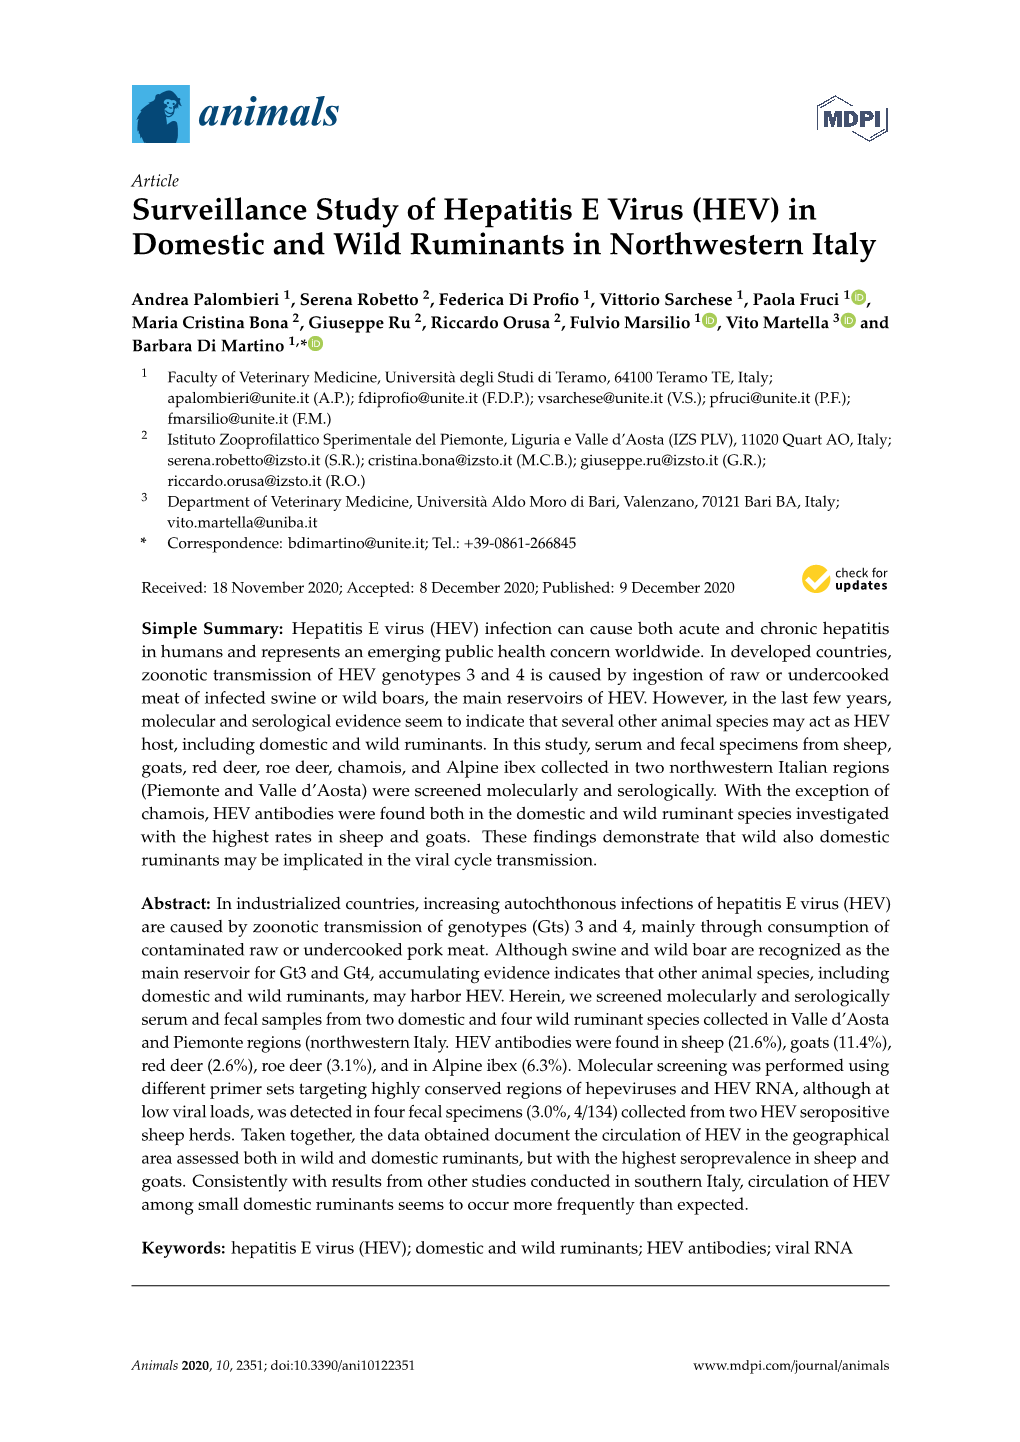 Surveillance Study of Hepatitis E Virus (HEV) in Domestic and Wild Ruminants in Northwestern Italy